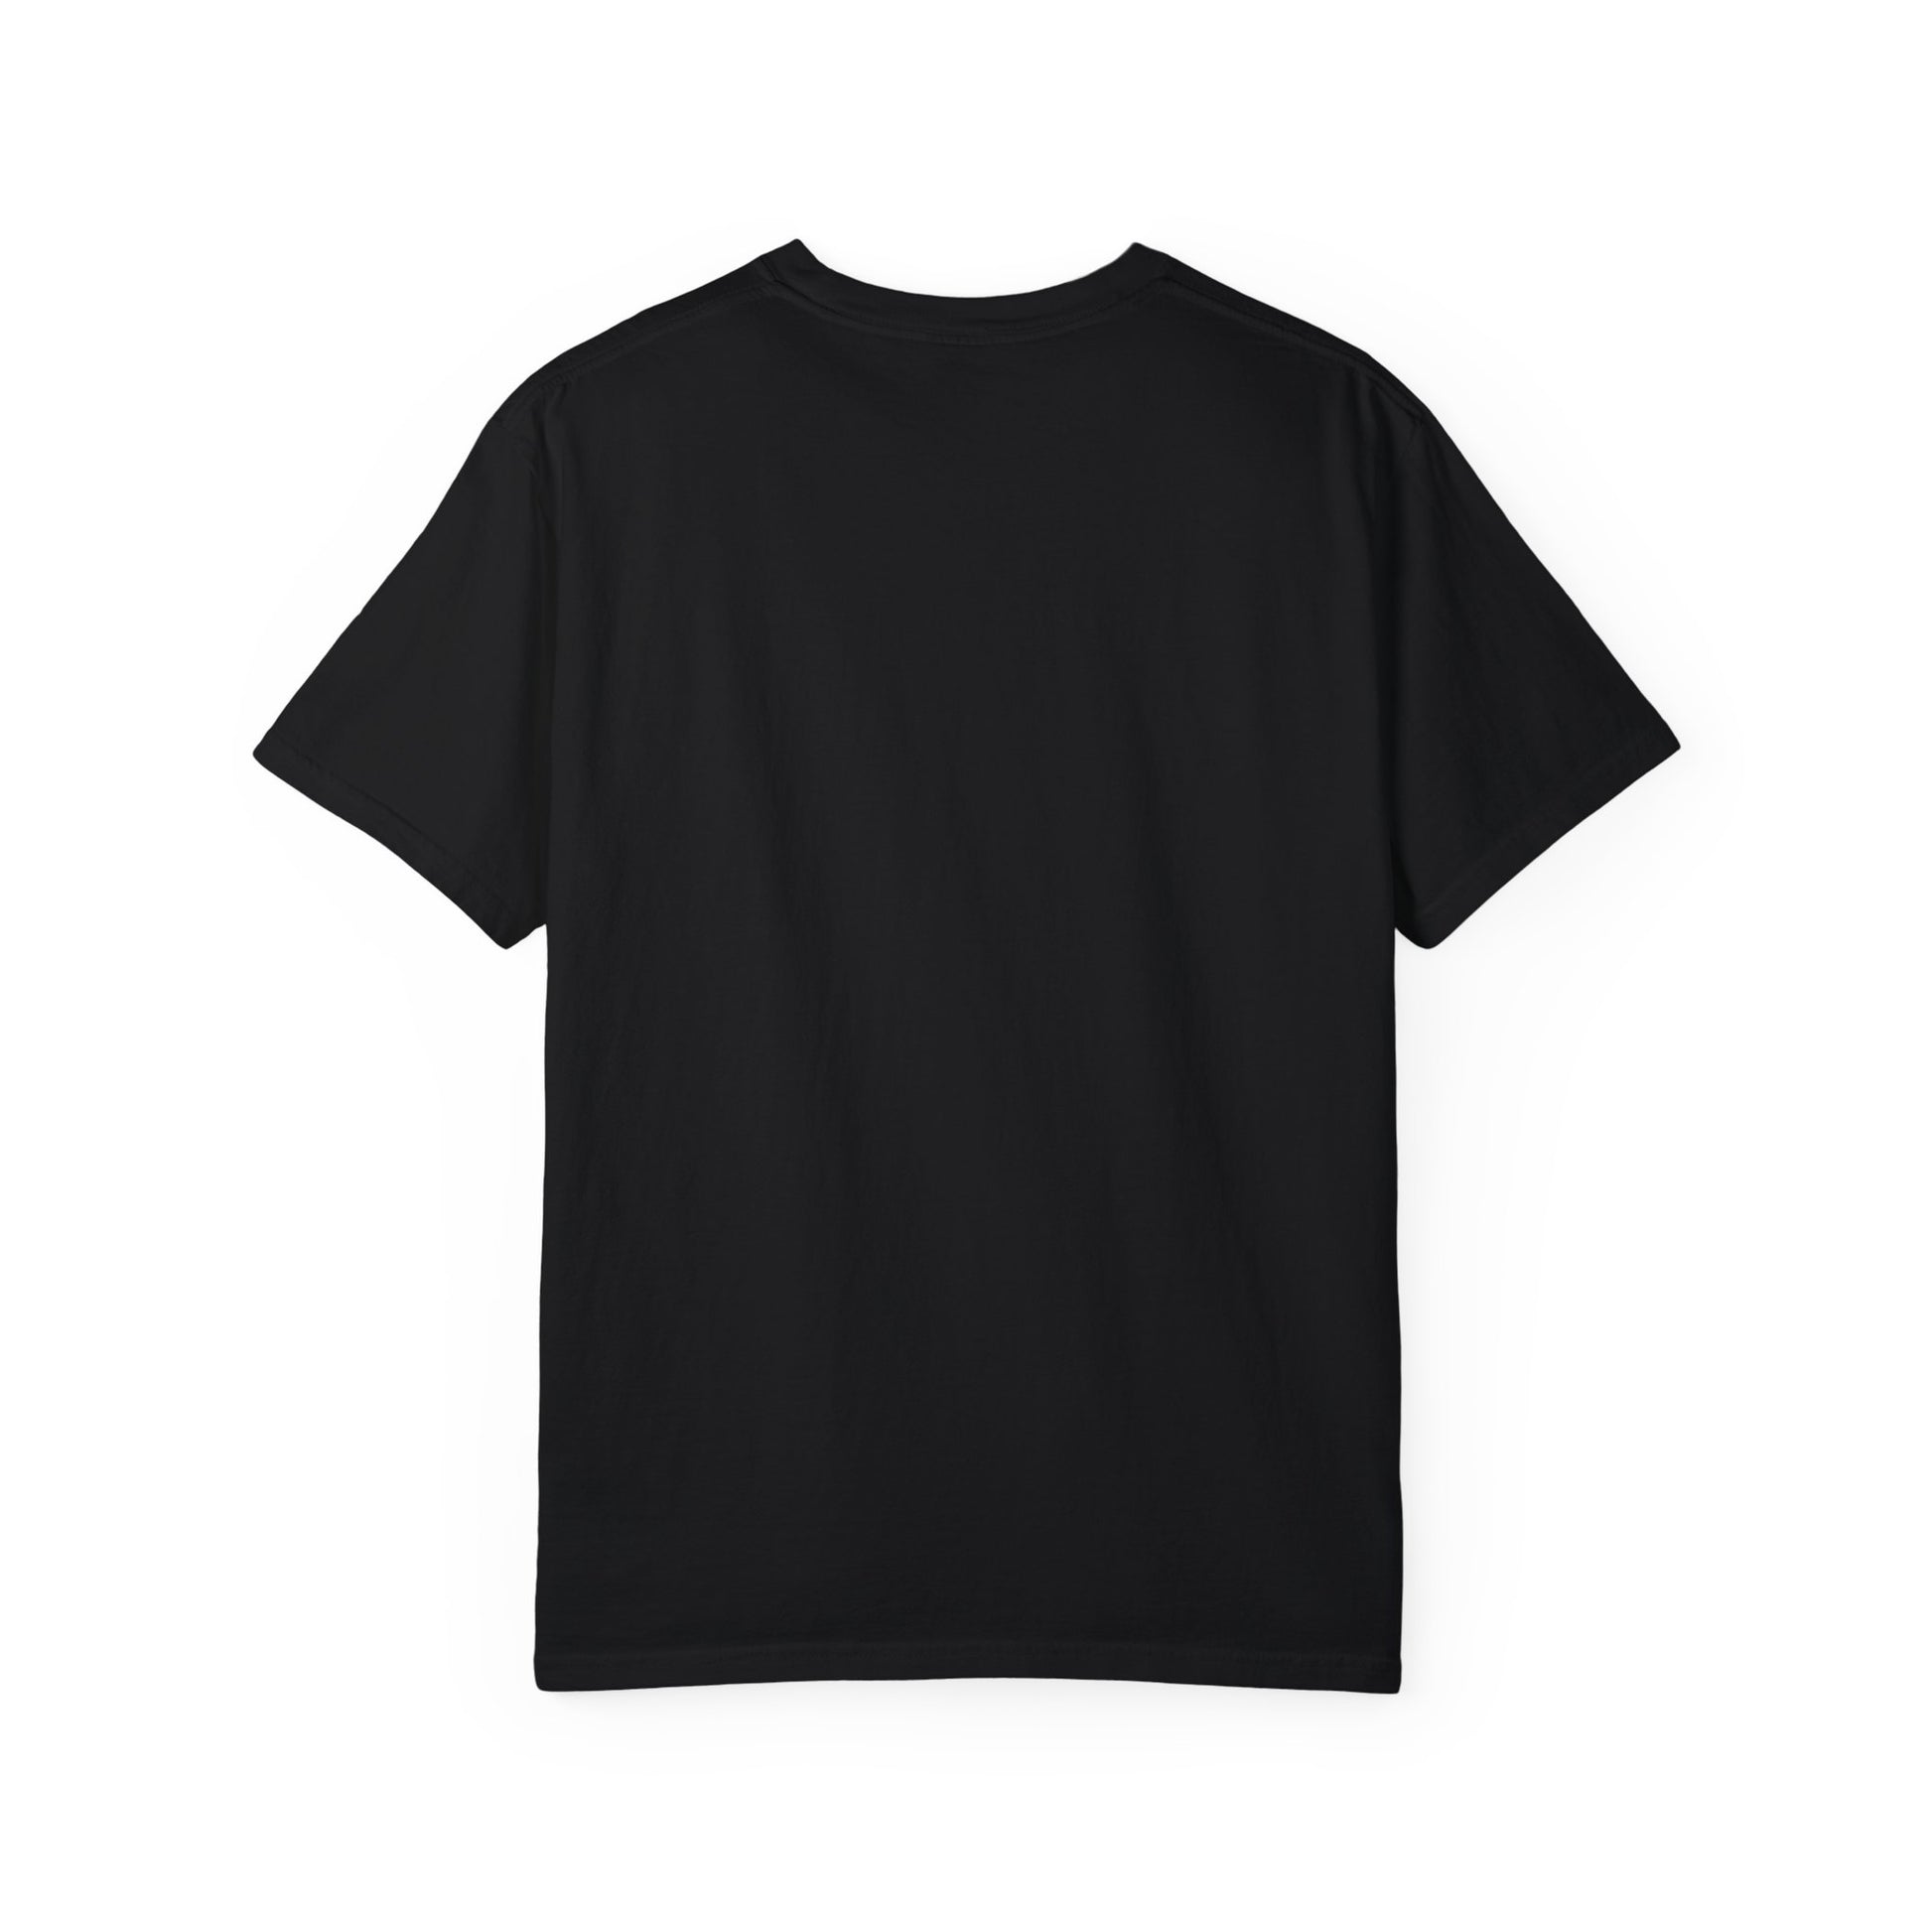 Hip Hop Teddy Bear Graphic Unisex Garment-dyed T-shirt Cotton Funny Humorous Graphic Soft Premium Unisex Men Women Black T-shirt Birthday Gift-19